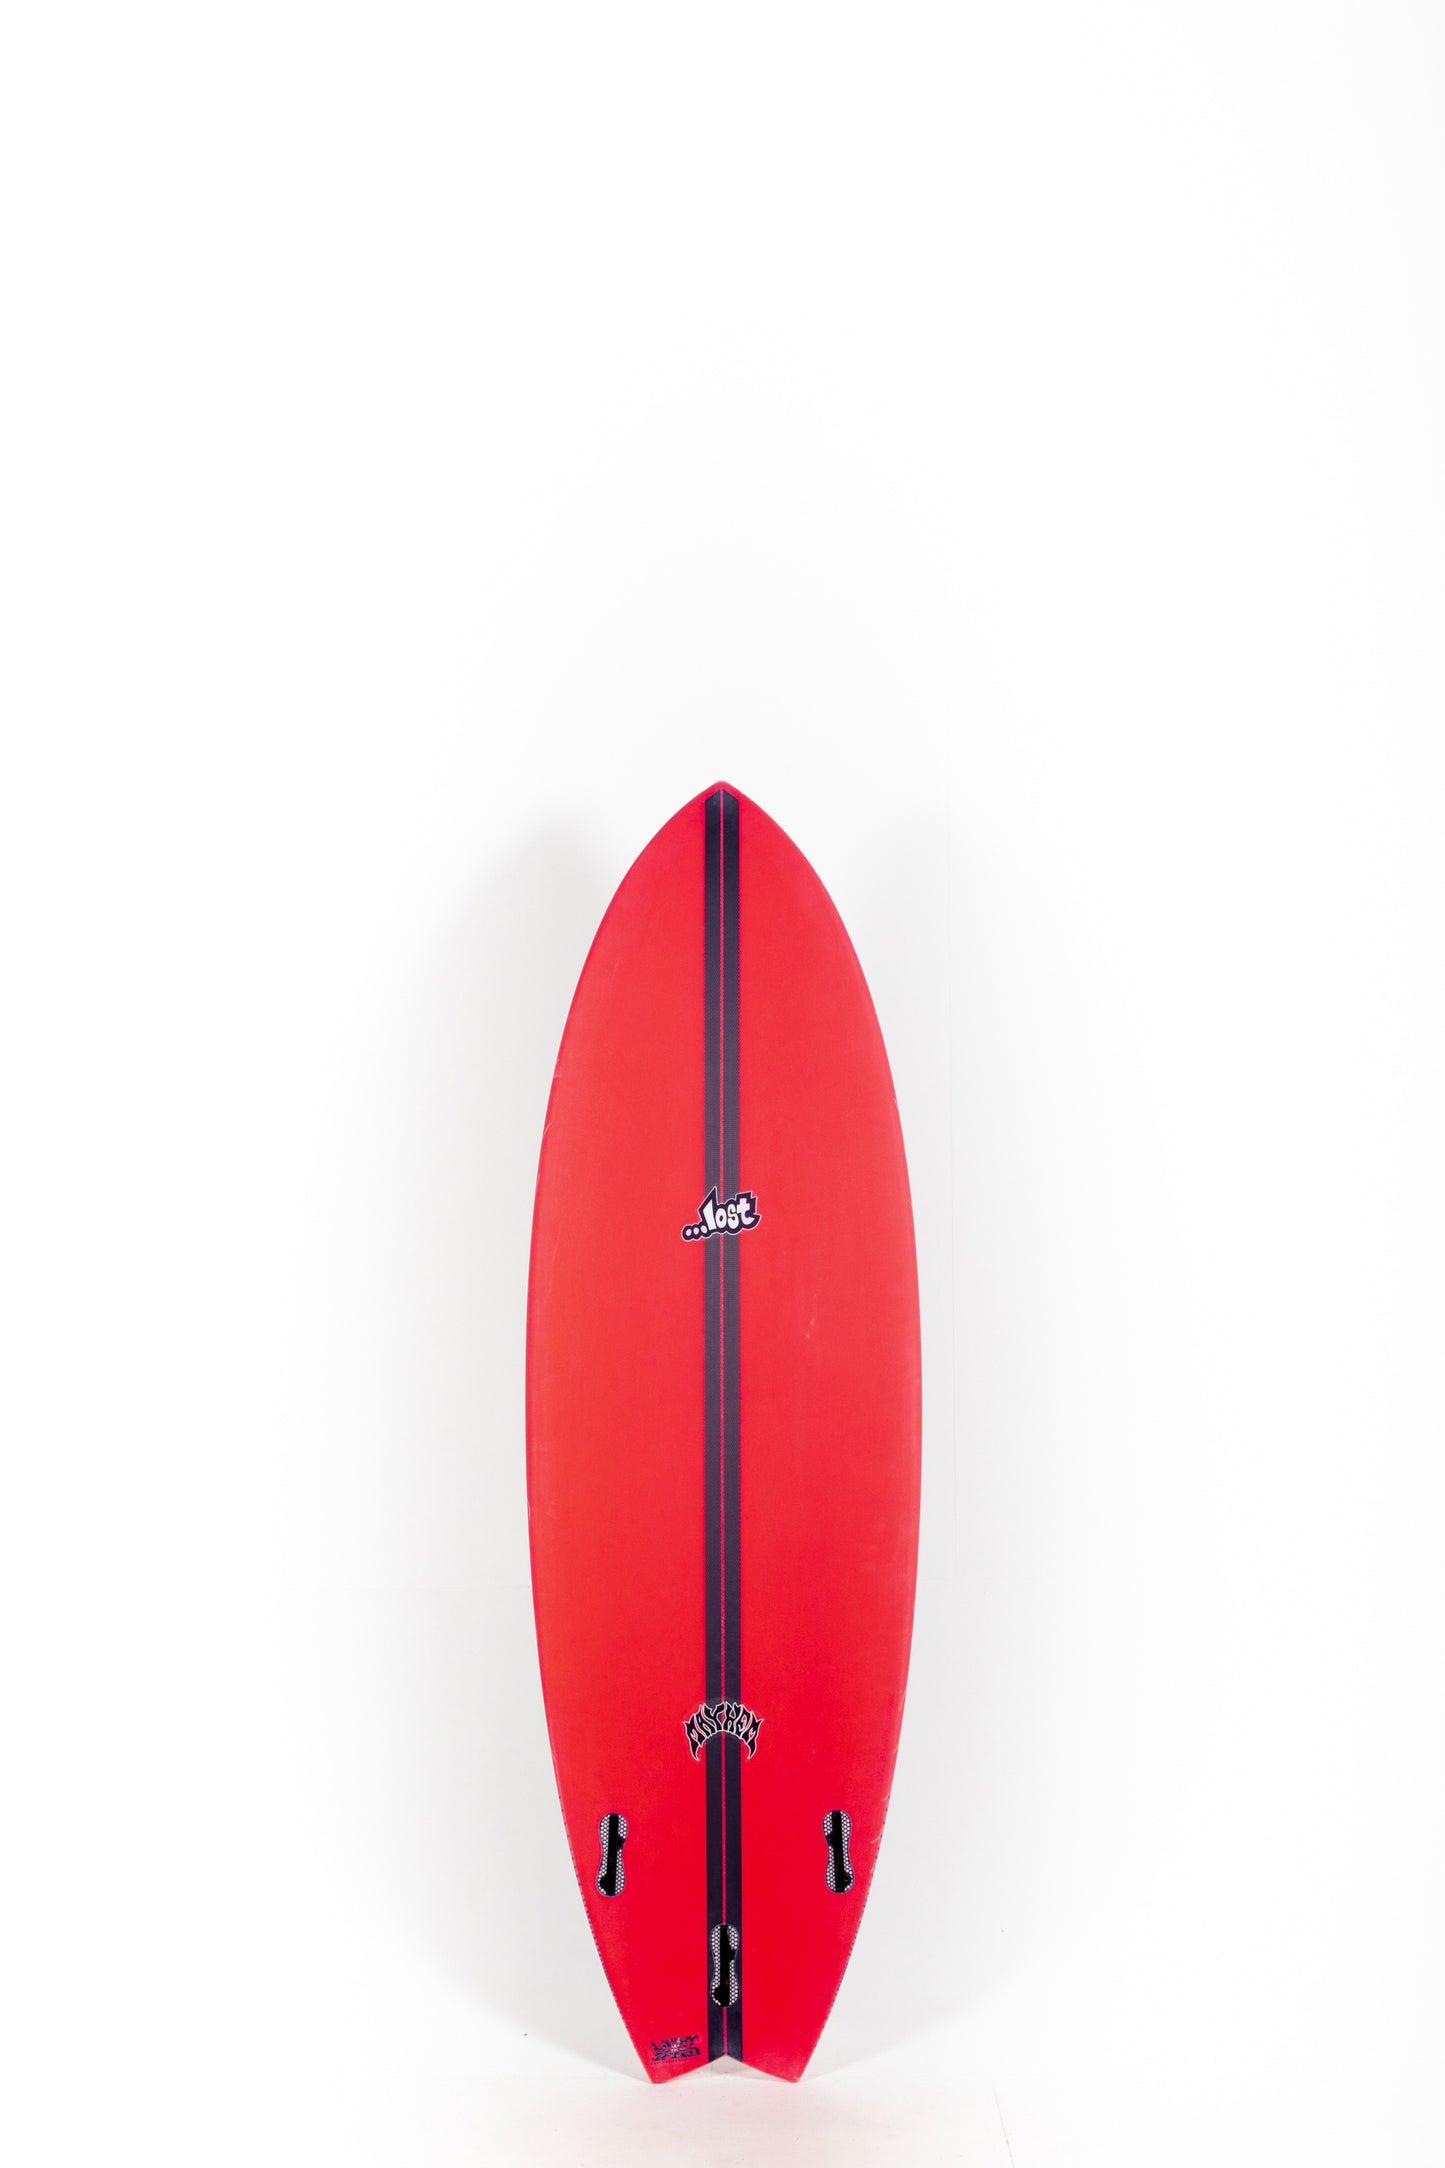 Pukas Surf Shop - Lost Surfboard - ROUND NOSE FISH - RNF '96 - Light Speed - 5'8"x 20,25" x 2.46 x 32L